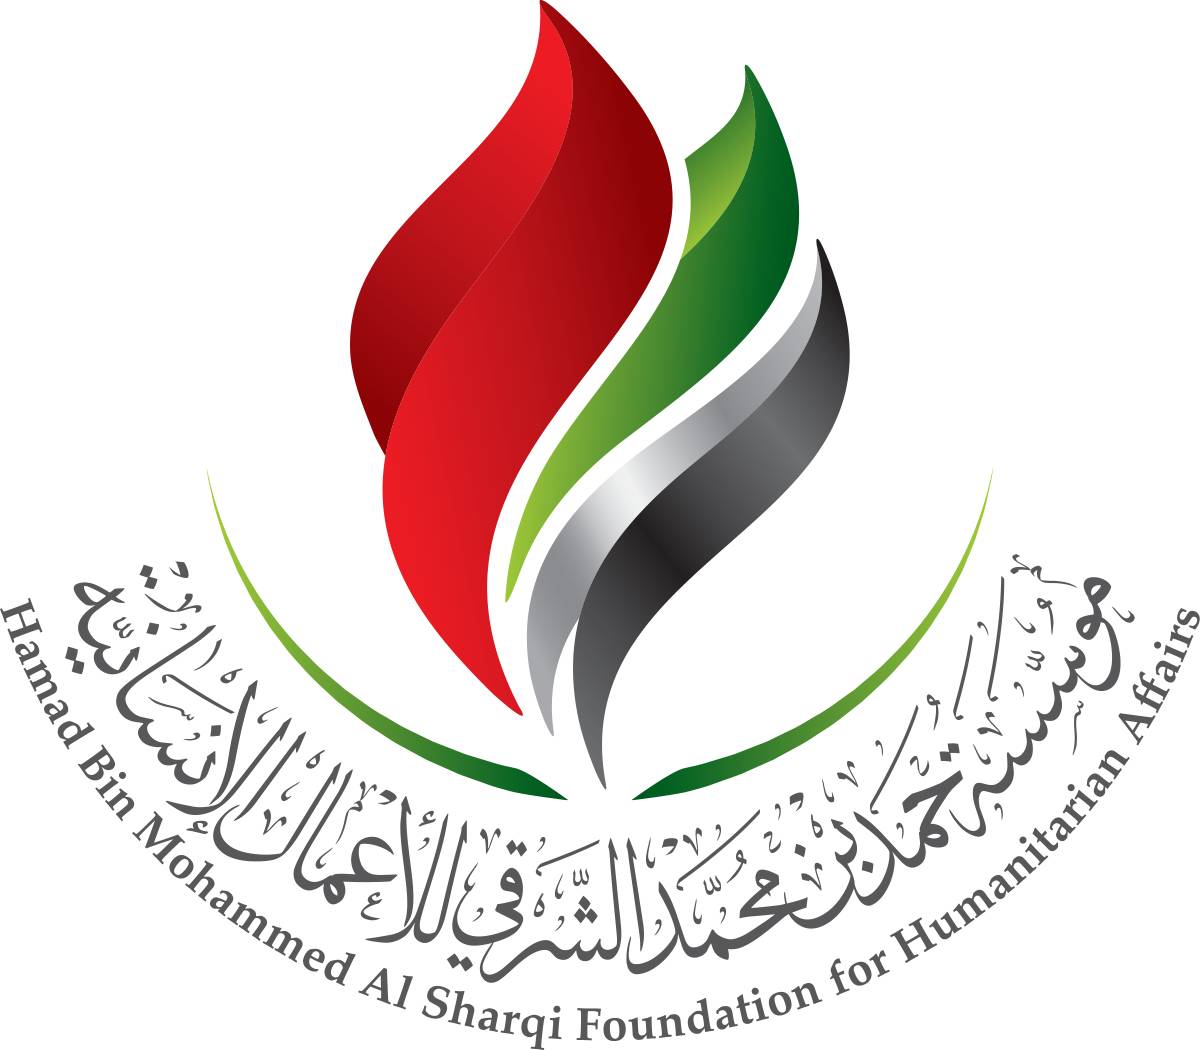 Hamad Bin Mohammed Al-Sharqi Foundation for Humanitarian Affaires